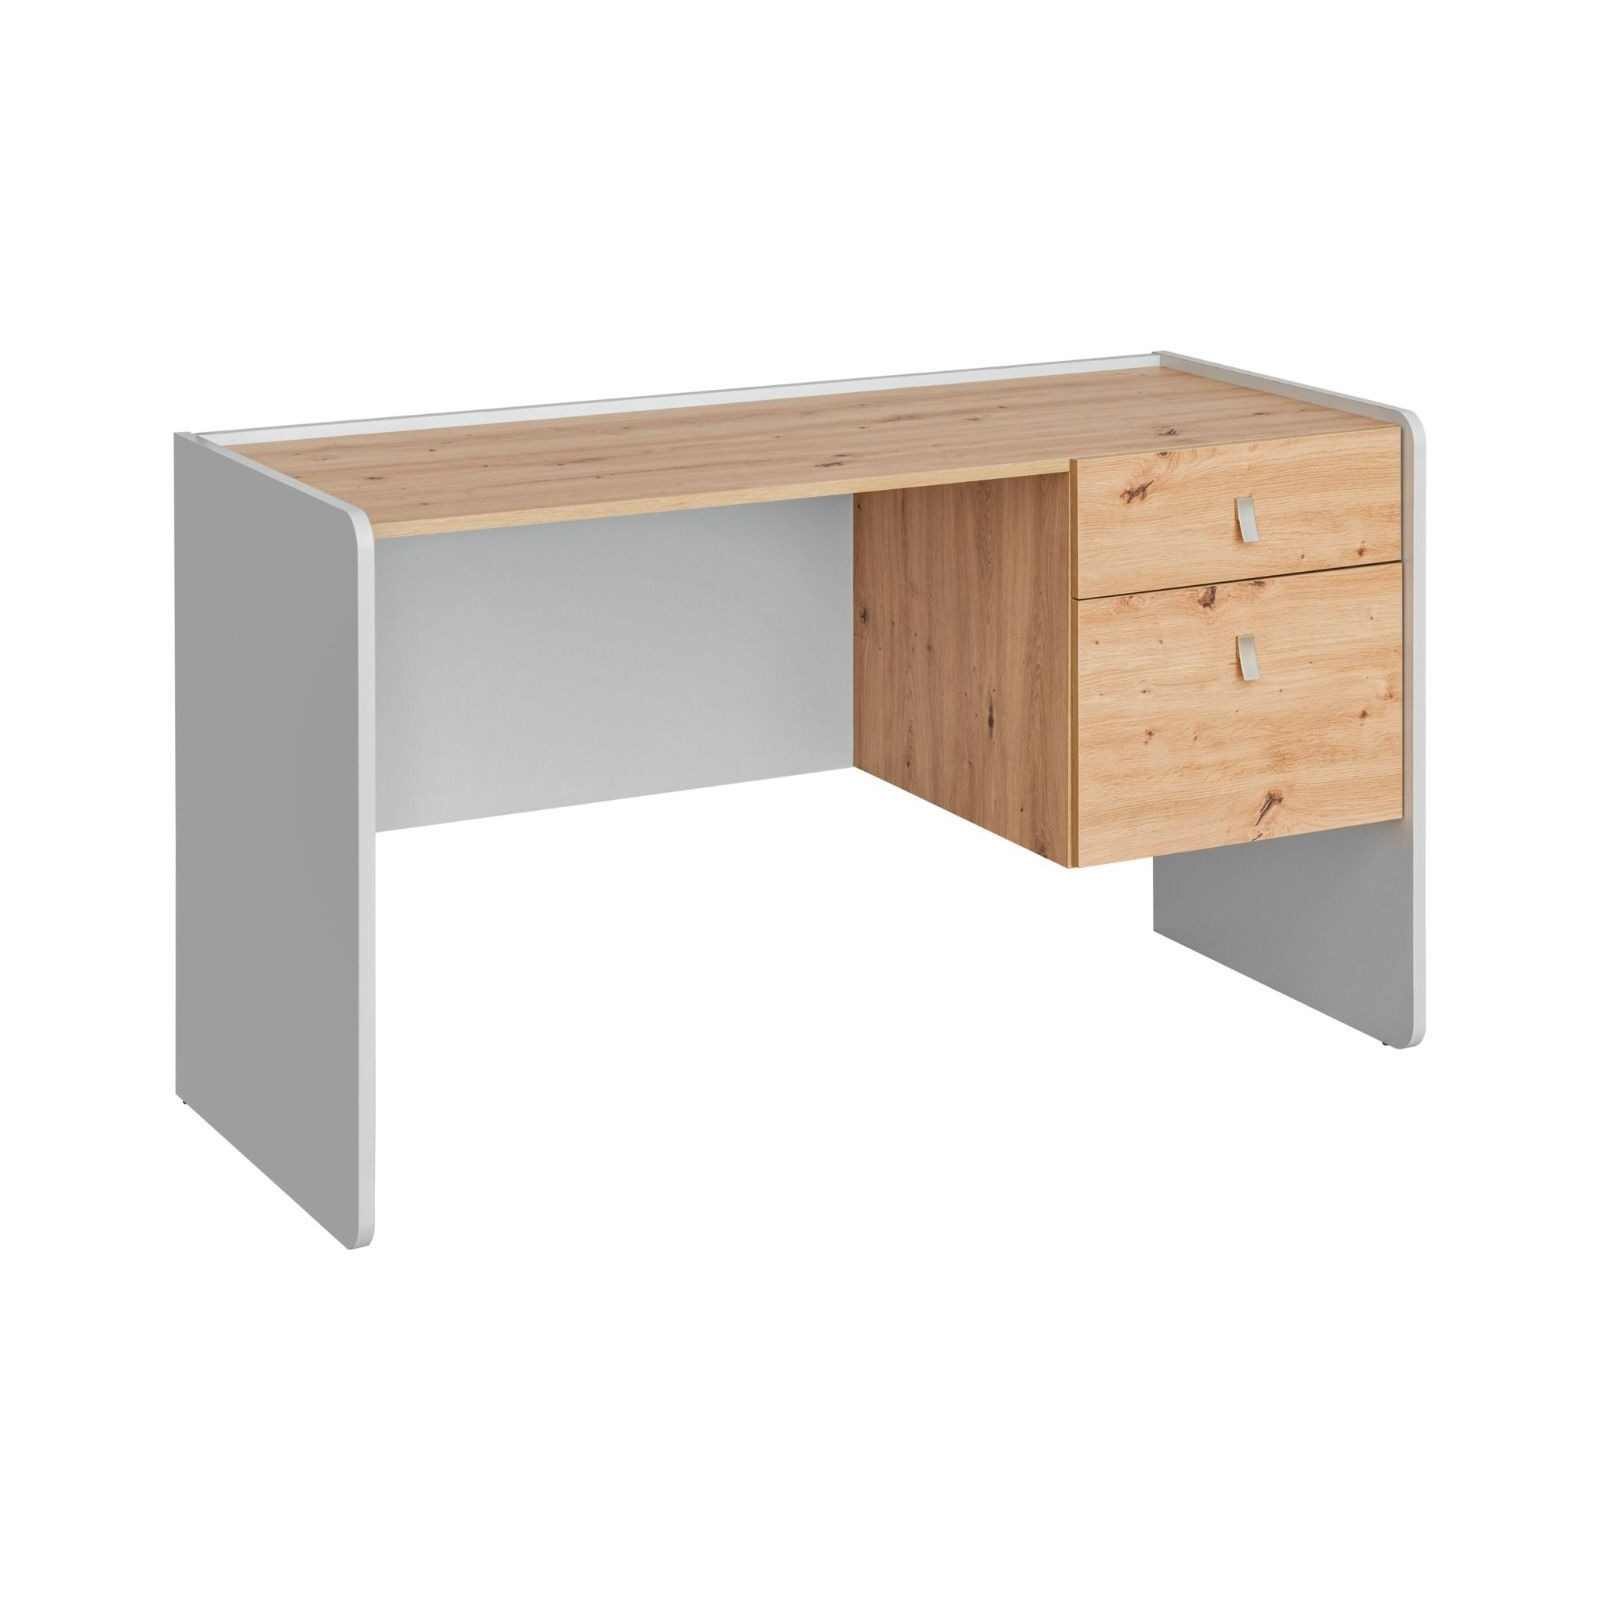 Vivero Desk 134cm - Oak Riviera 139cm - image 1